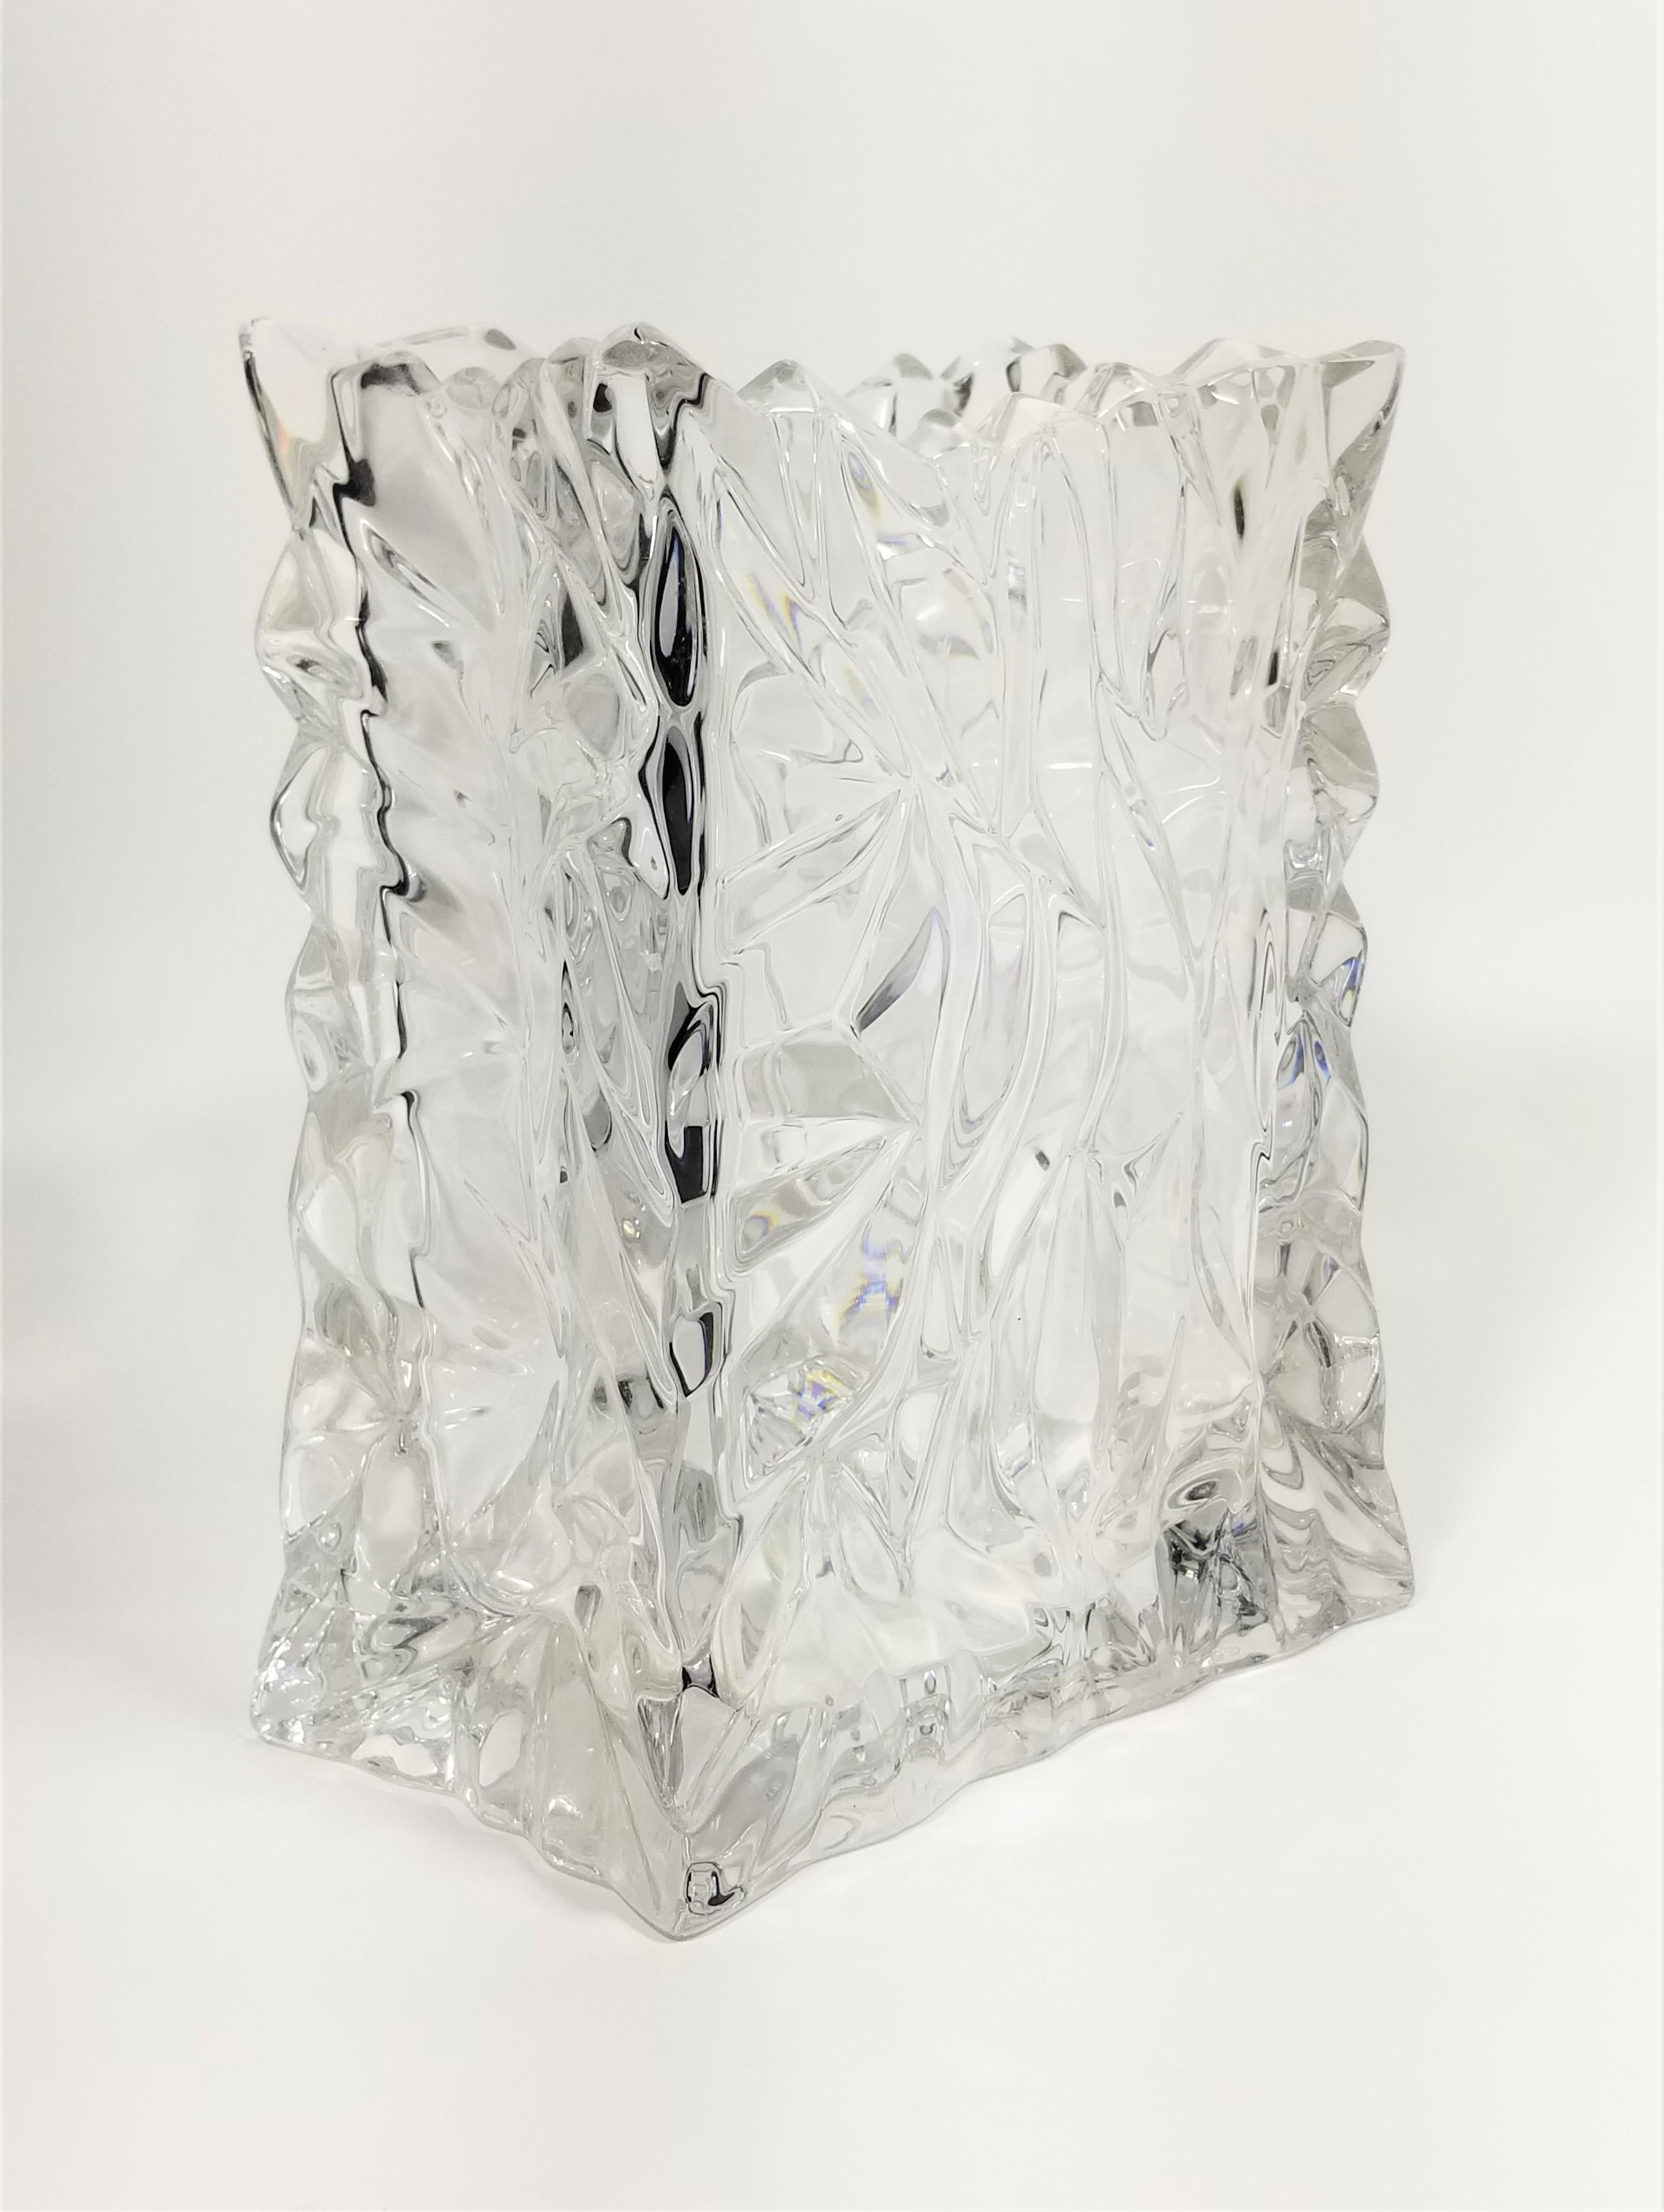 20th Century Rosenthal Crystal Vase Brutalist Design Made in Germany For Sale